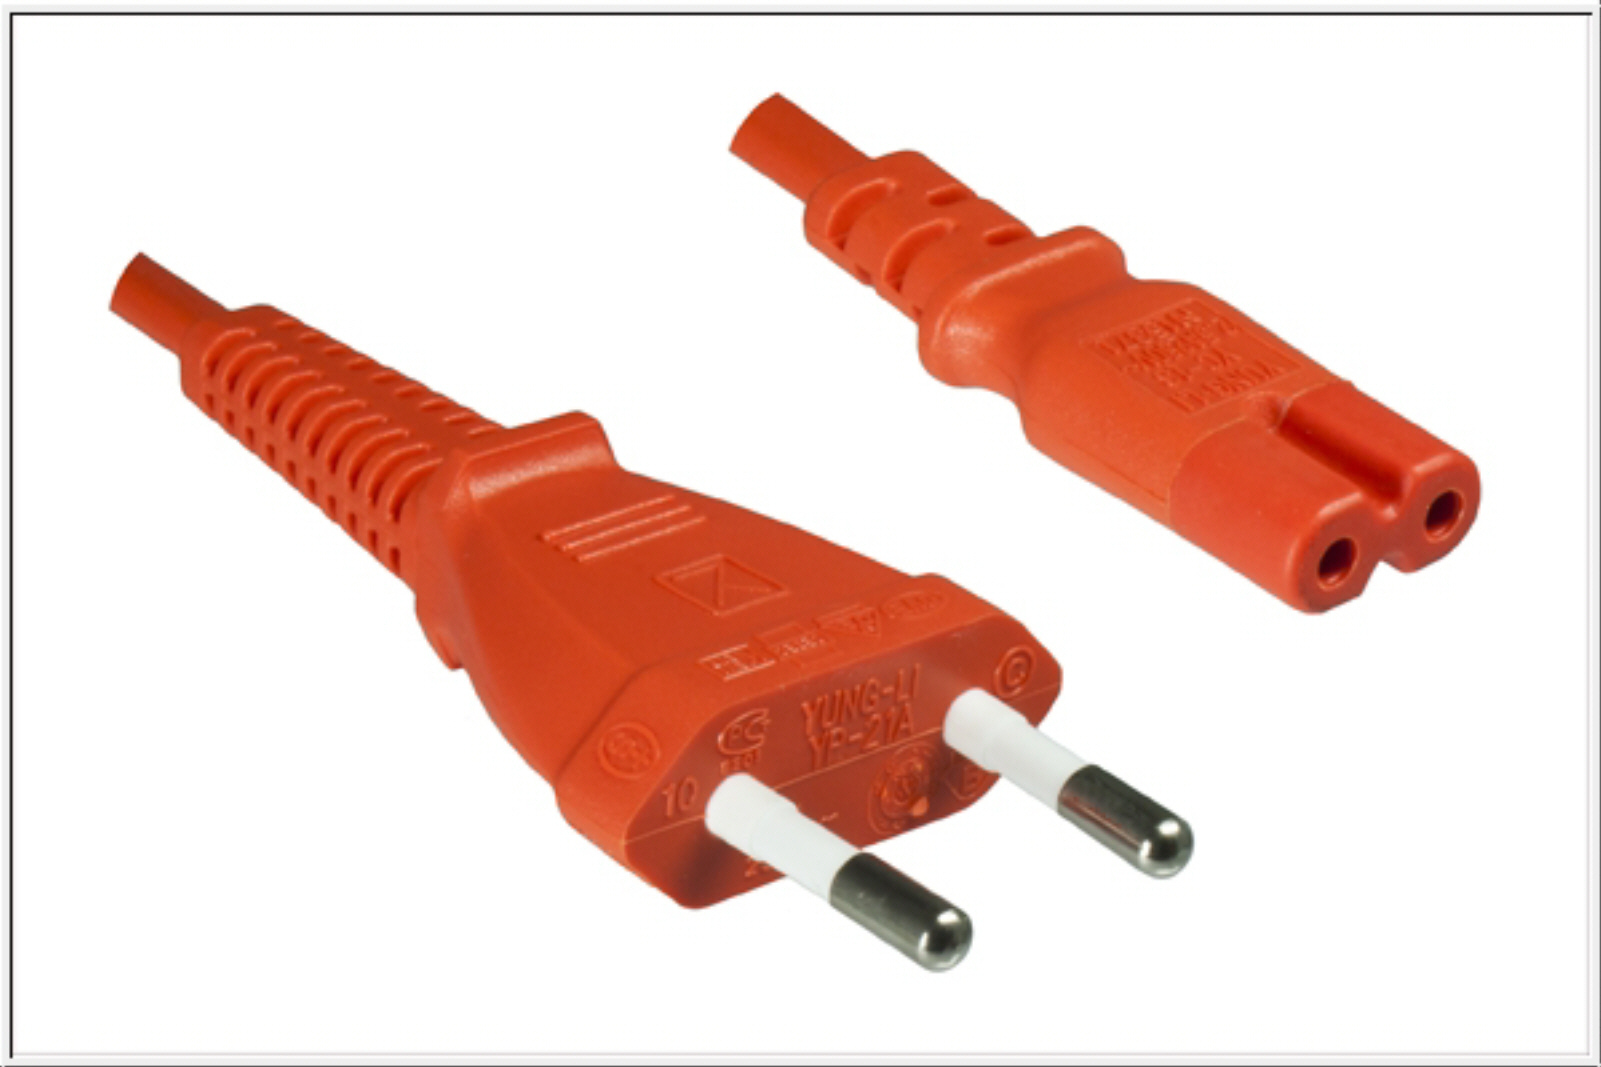 Netzkabel Eurostecker/IEC 60320-C7, orange 180cm, CE